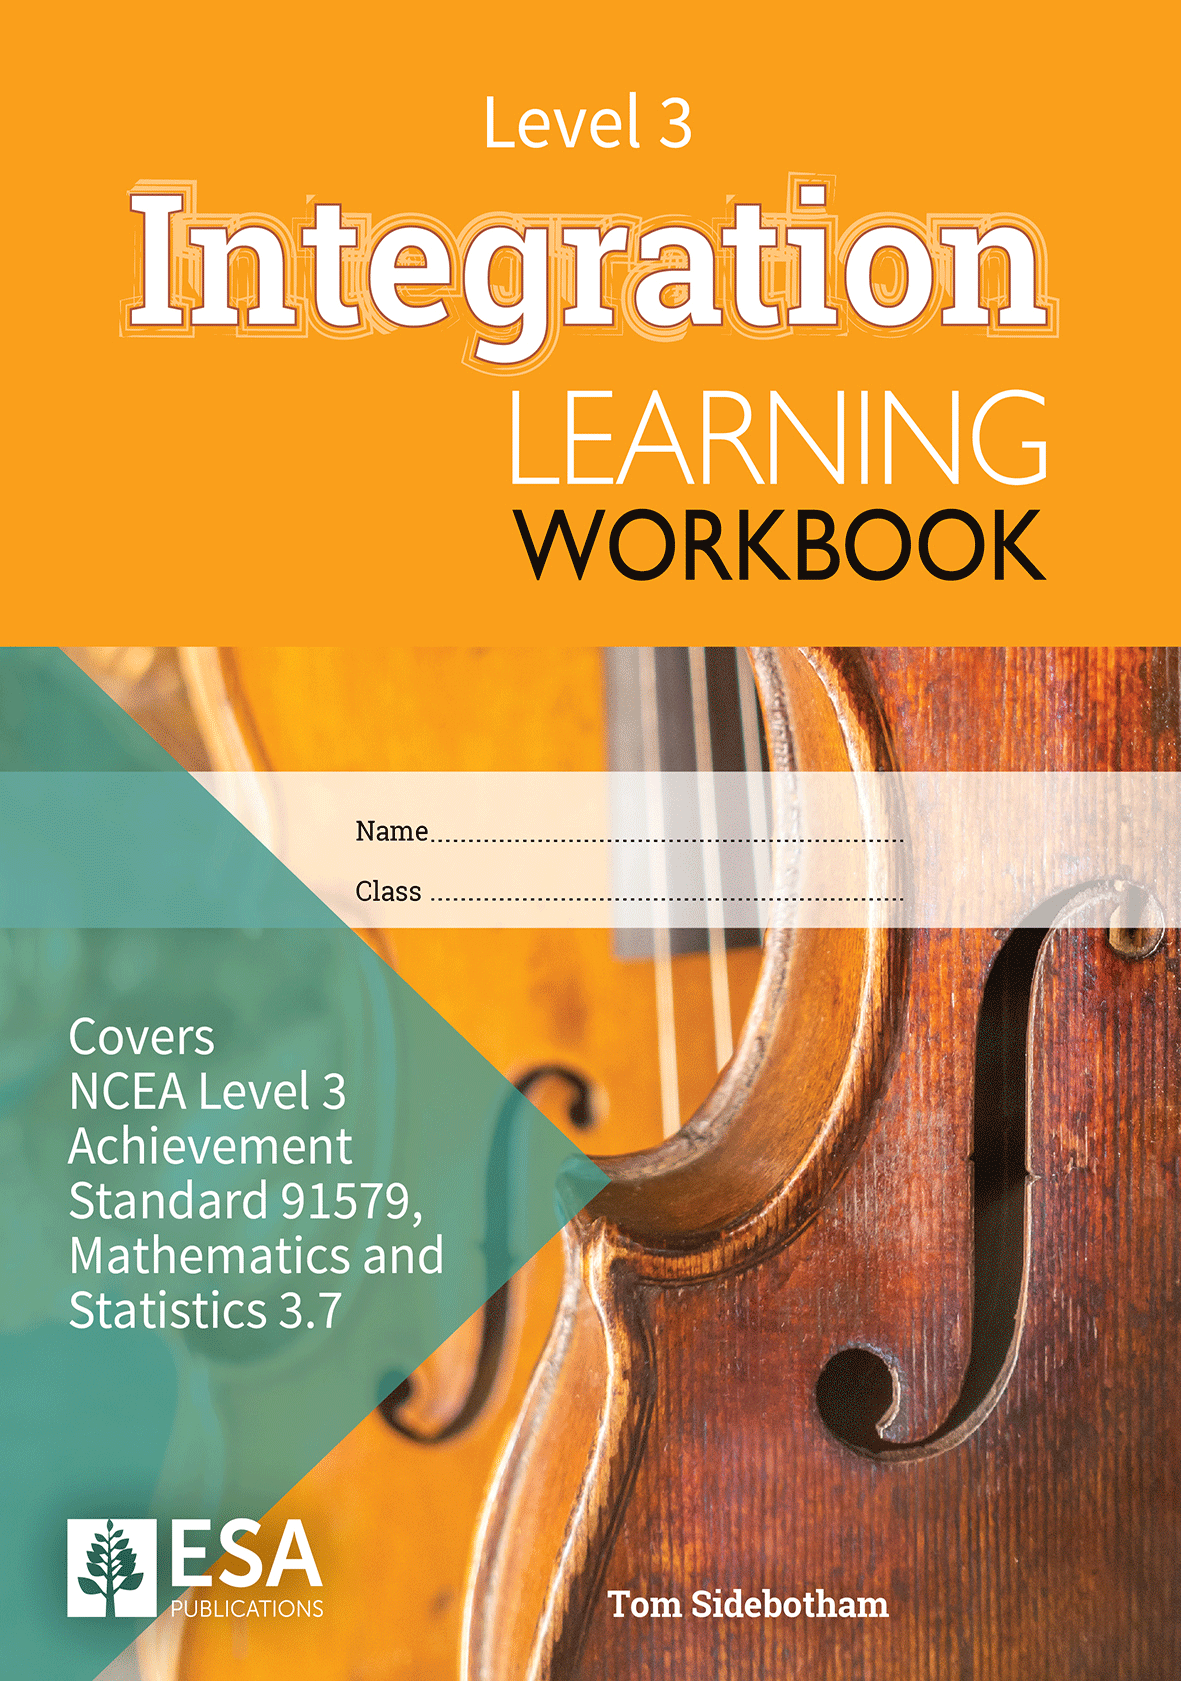 Level 3 Integration 3.7 Learning Workbook